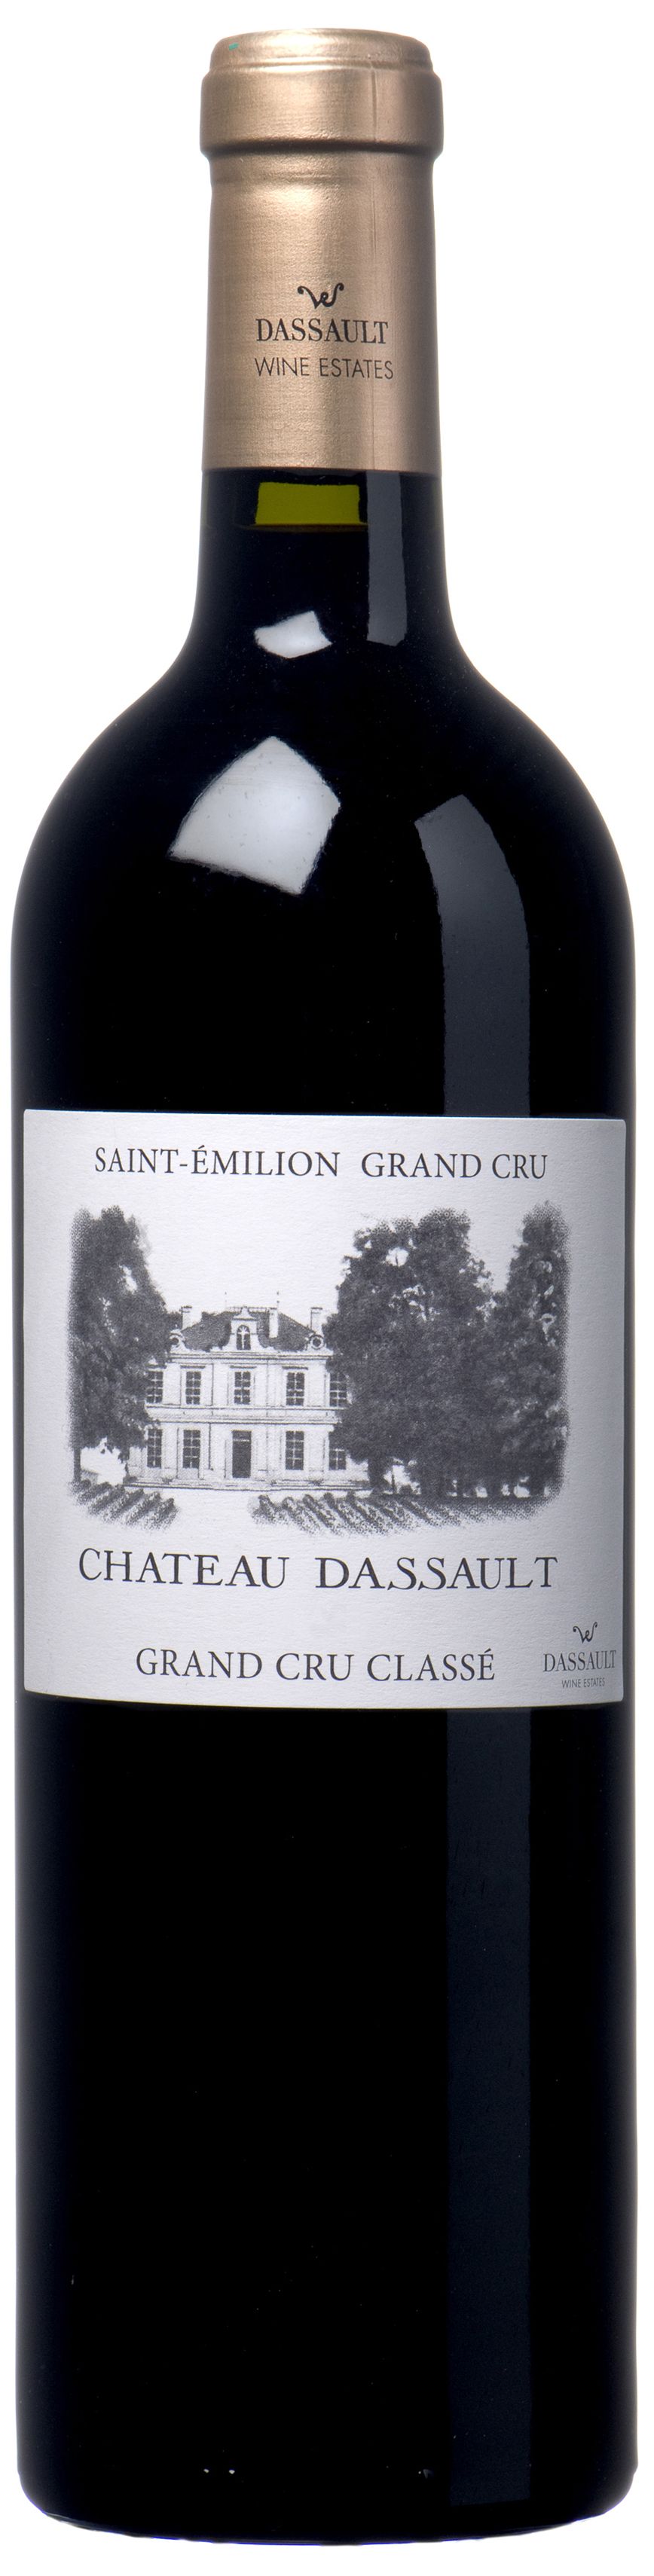 Chateau Dassault, 2005